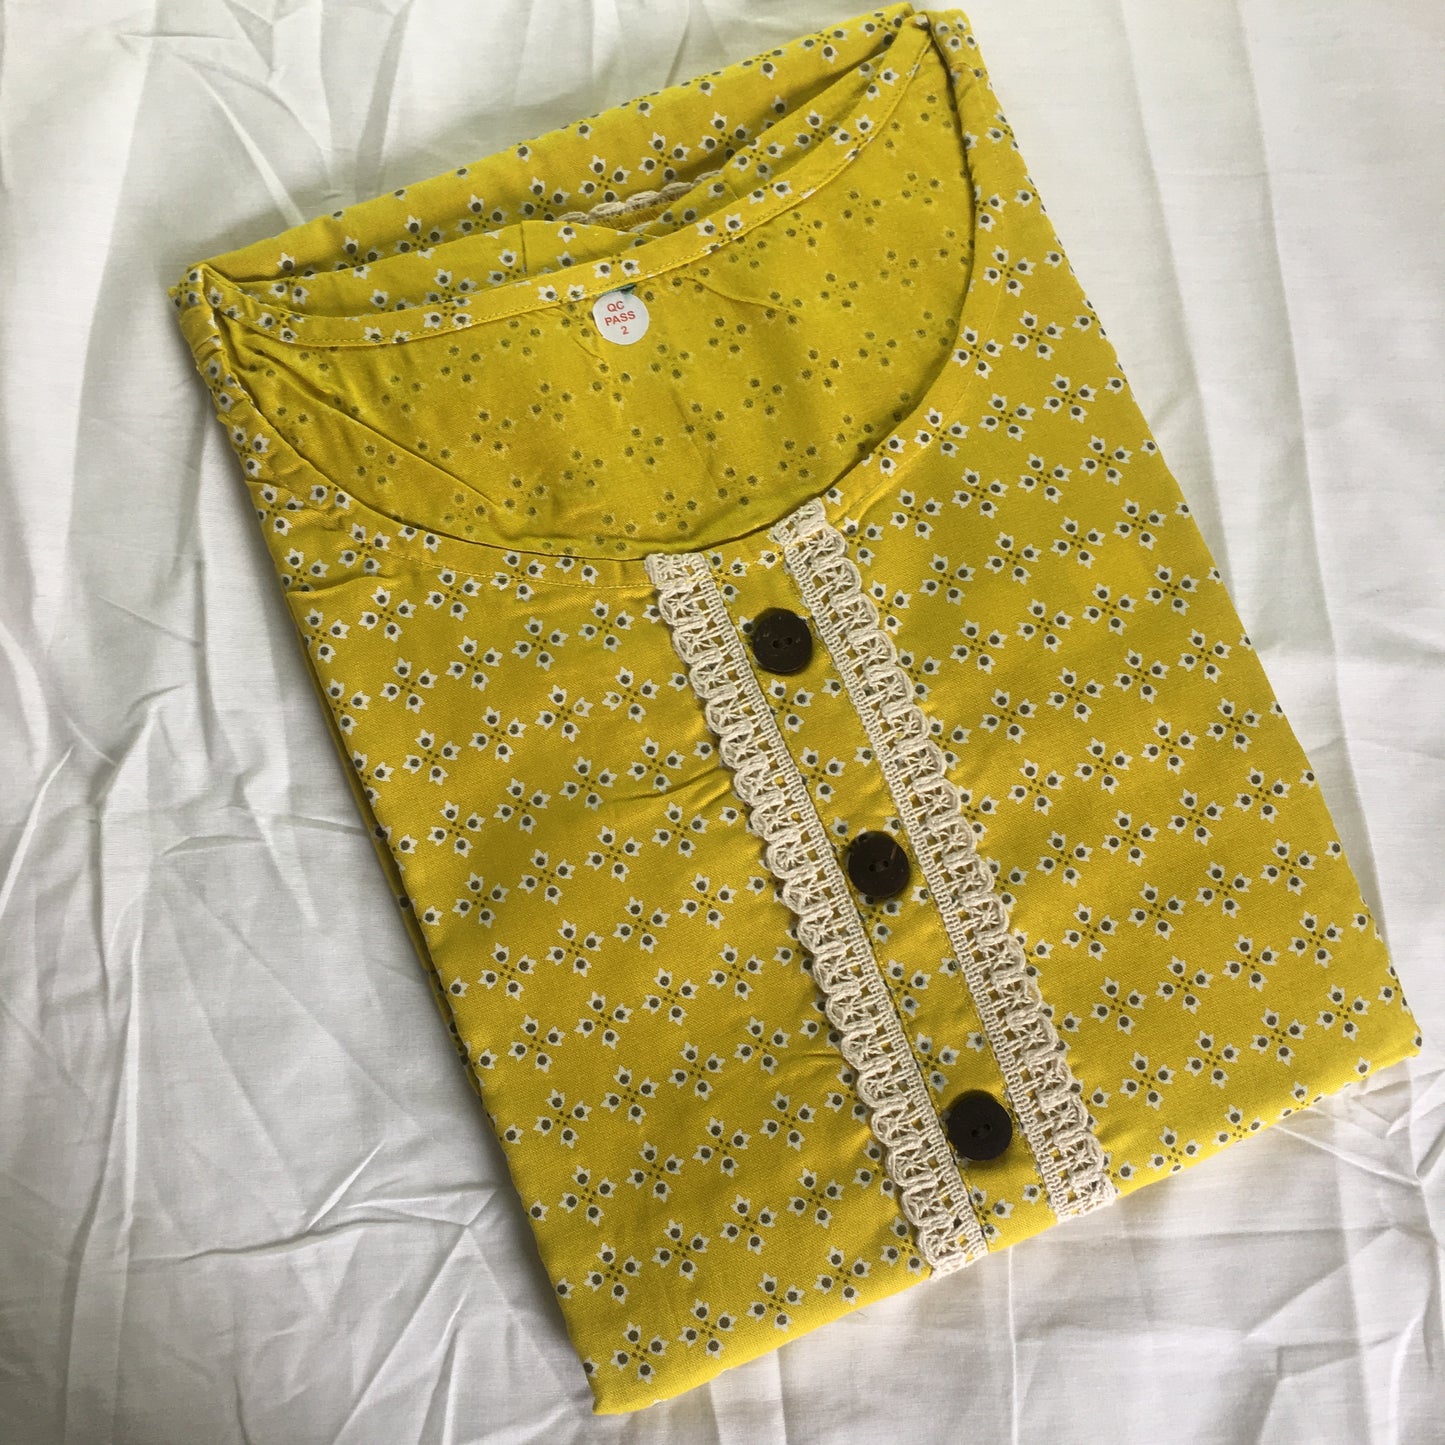 Yellow Lace work Cotton Kurti- Knee Length - 3871